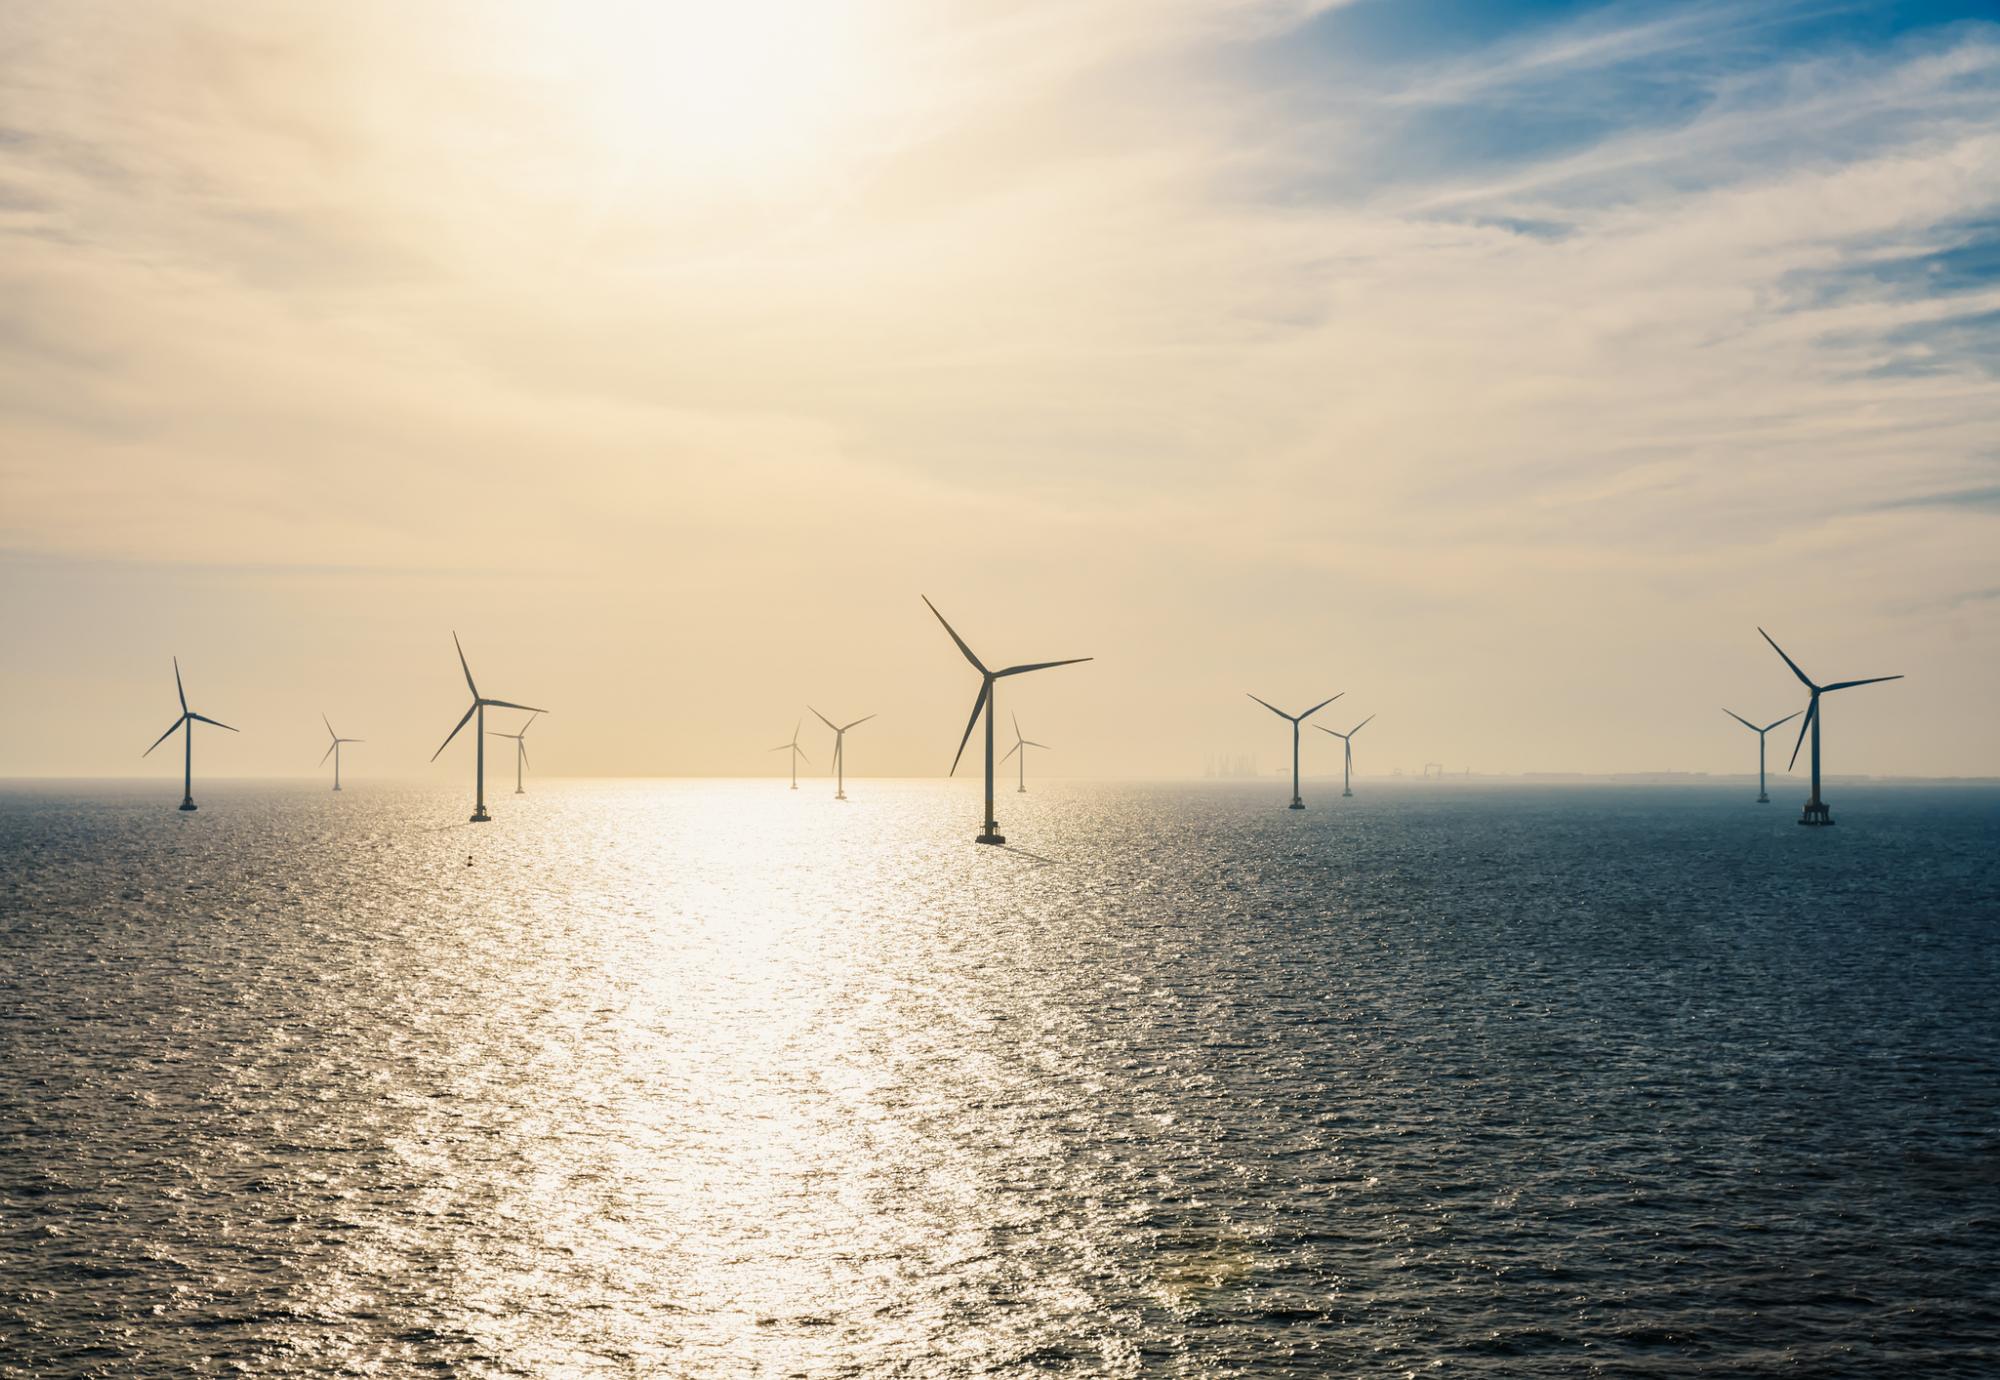 Offshore wind farm generating energy for UK.